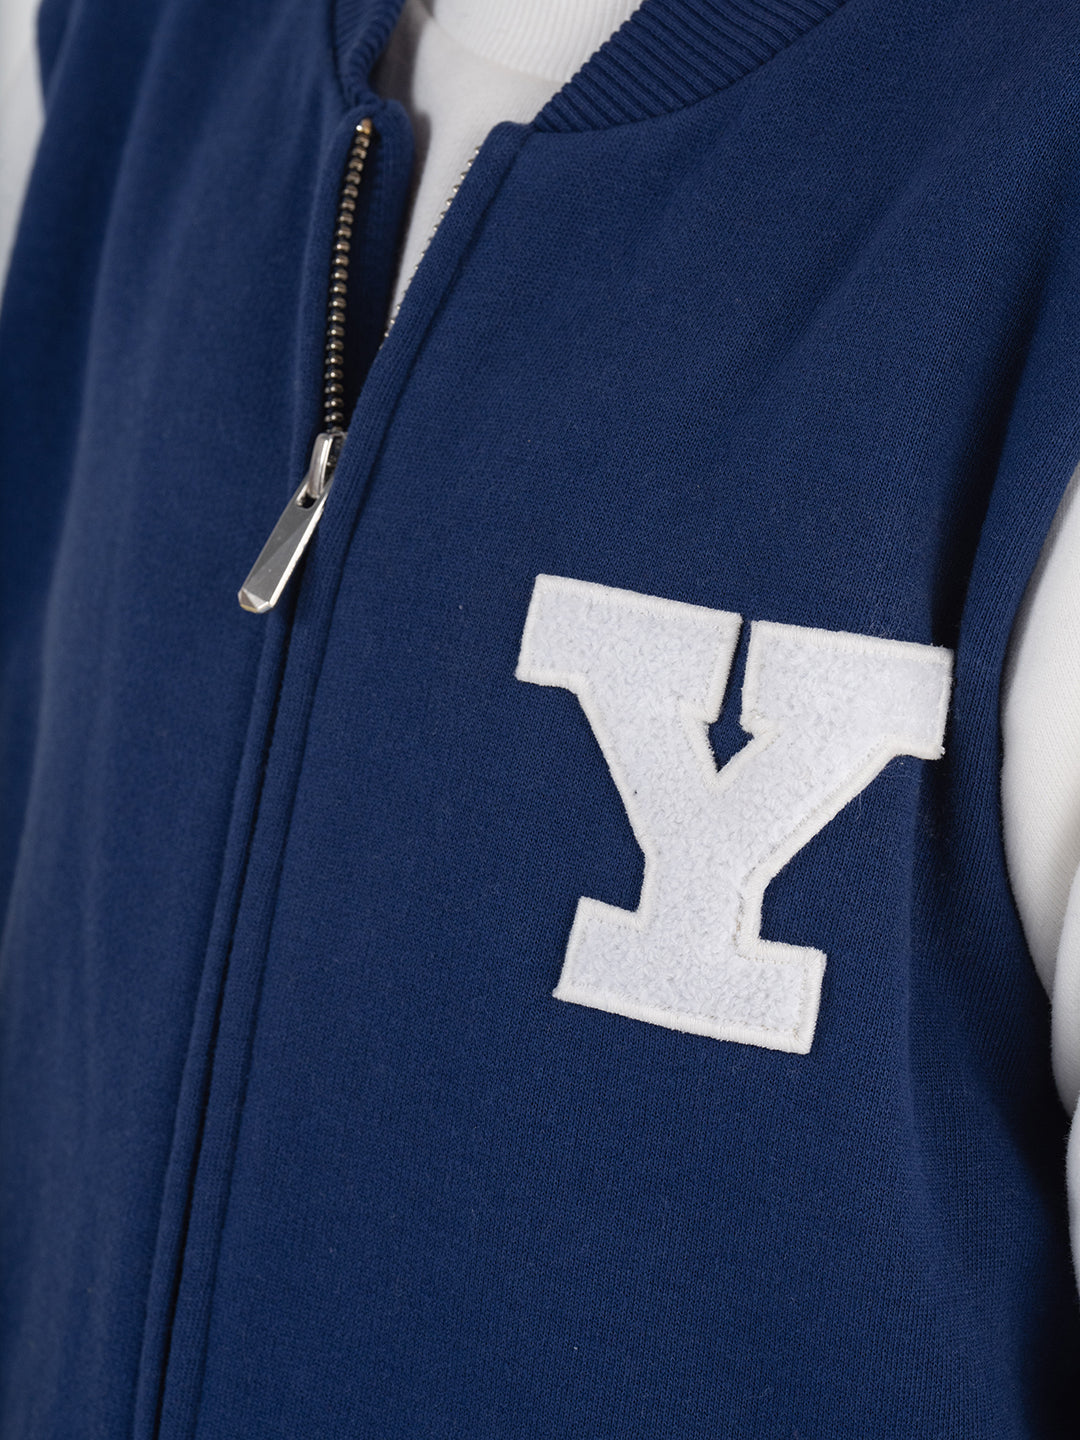 Navy Blue Yale Embroidered Jacket